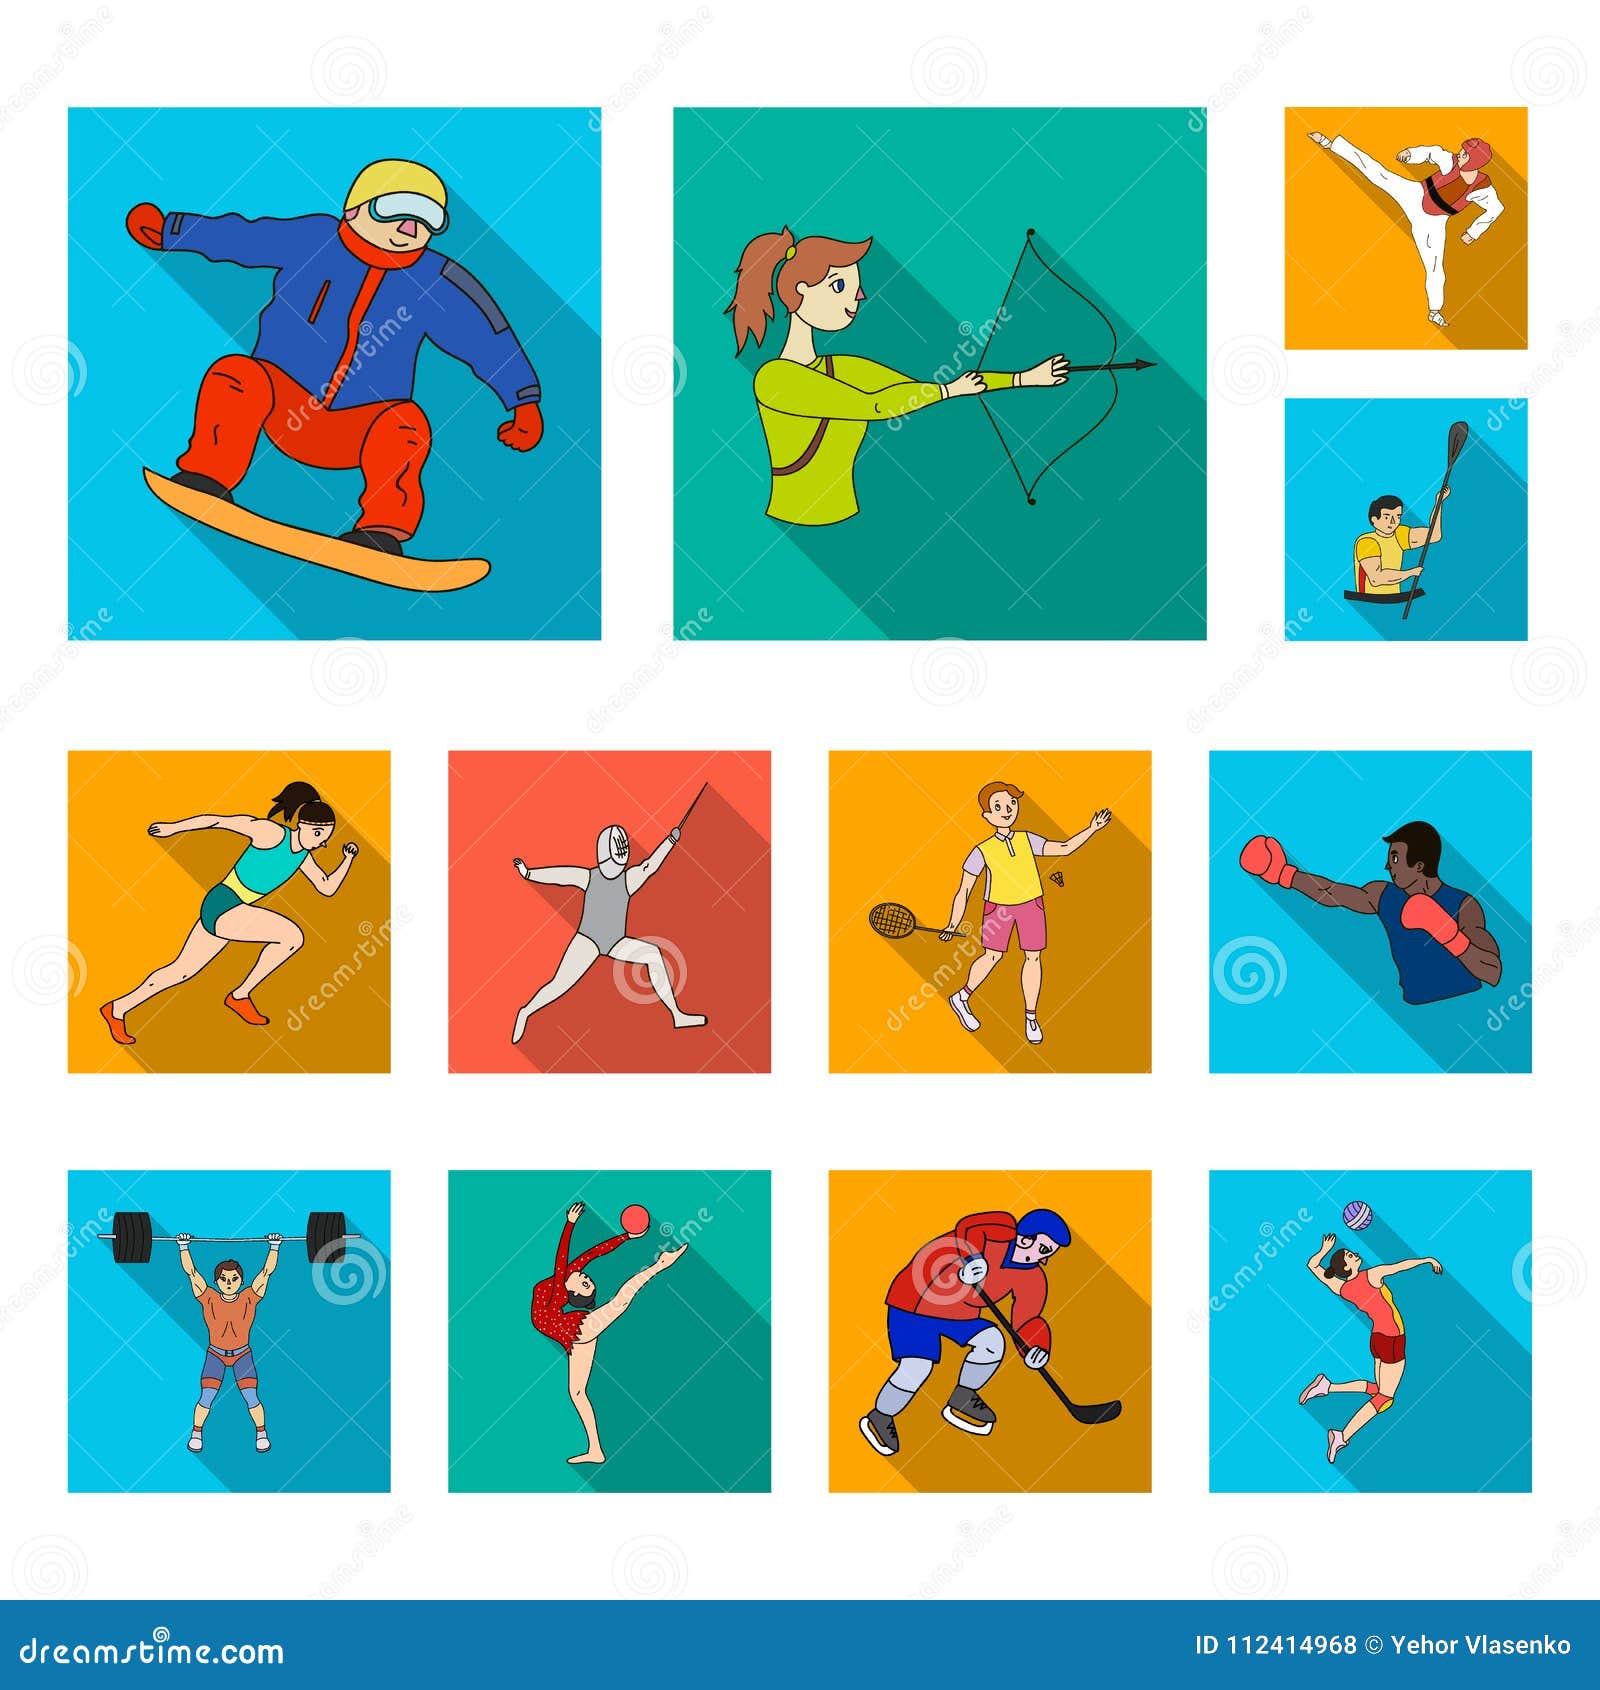 Different kind of sport. Иллюстрации с разными видами спорта. Виды спорта для детей. Виды спорта картинки для детей. Спорт ассоциации.